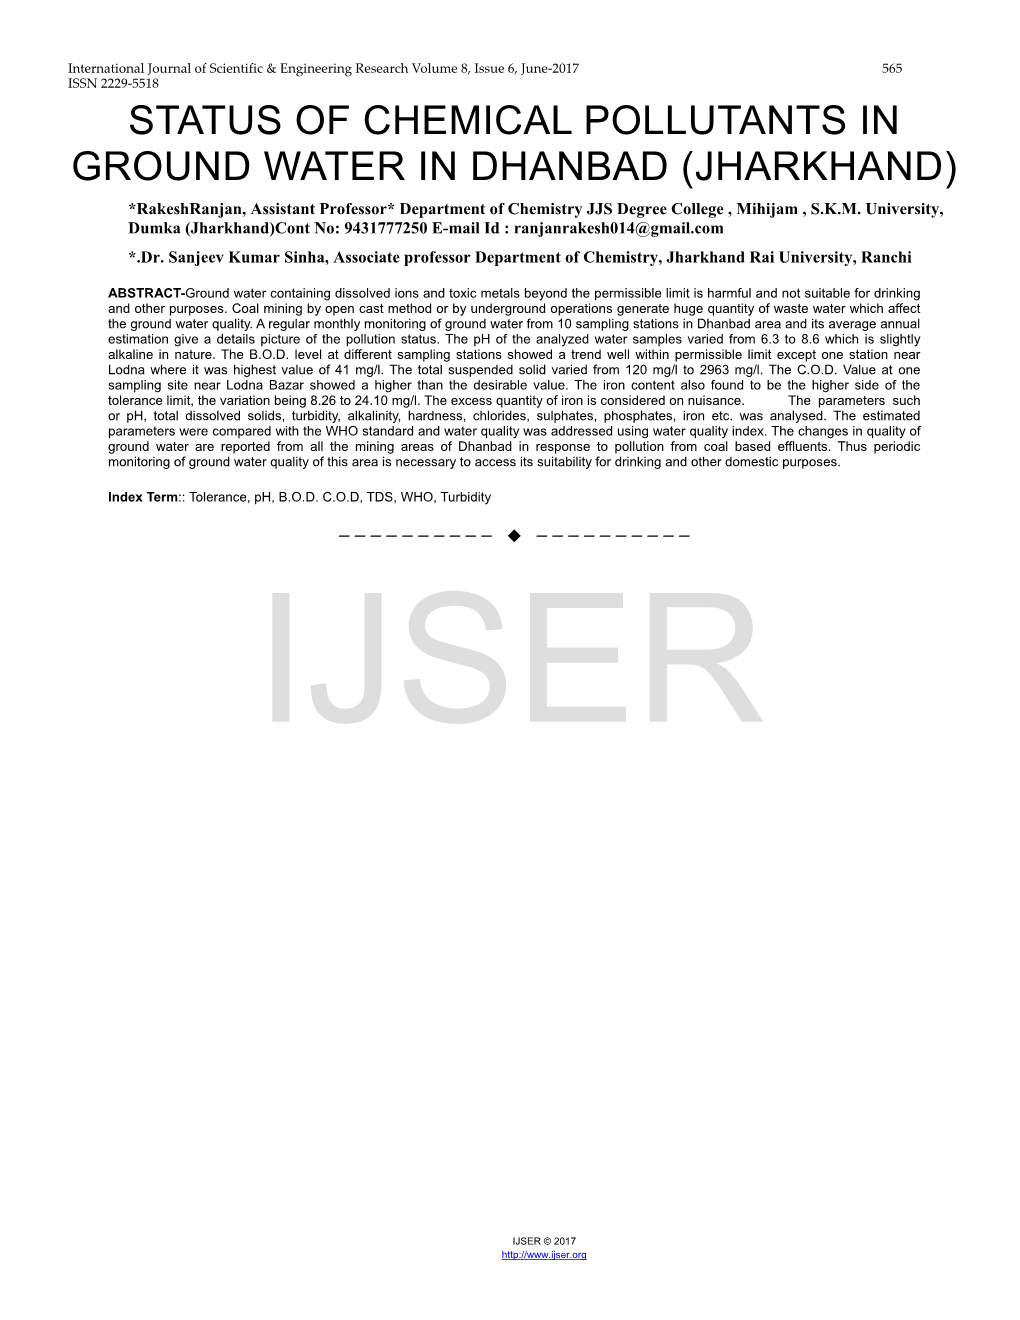 STATUS of CHEMICAL POLLUTANTS in GROUND WATER in DHANBAD (JHARKHAND) *Rakeshranjan, Assistant Professor* Department of Chemistry JJS Degree College , Mihijam , S.K.M